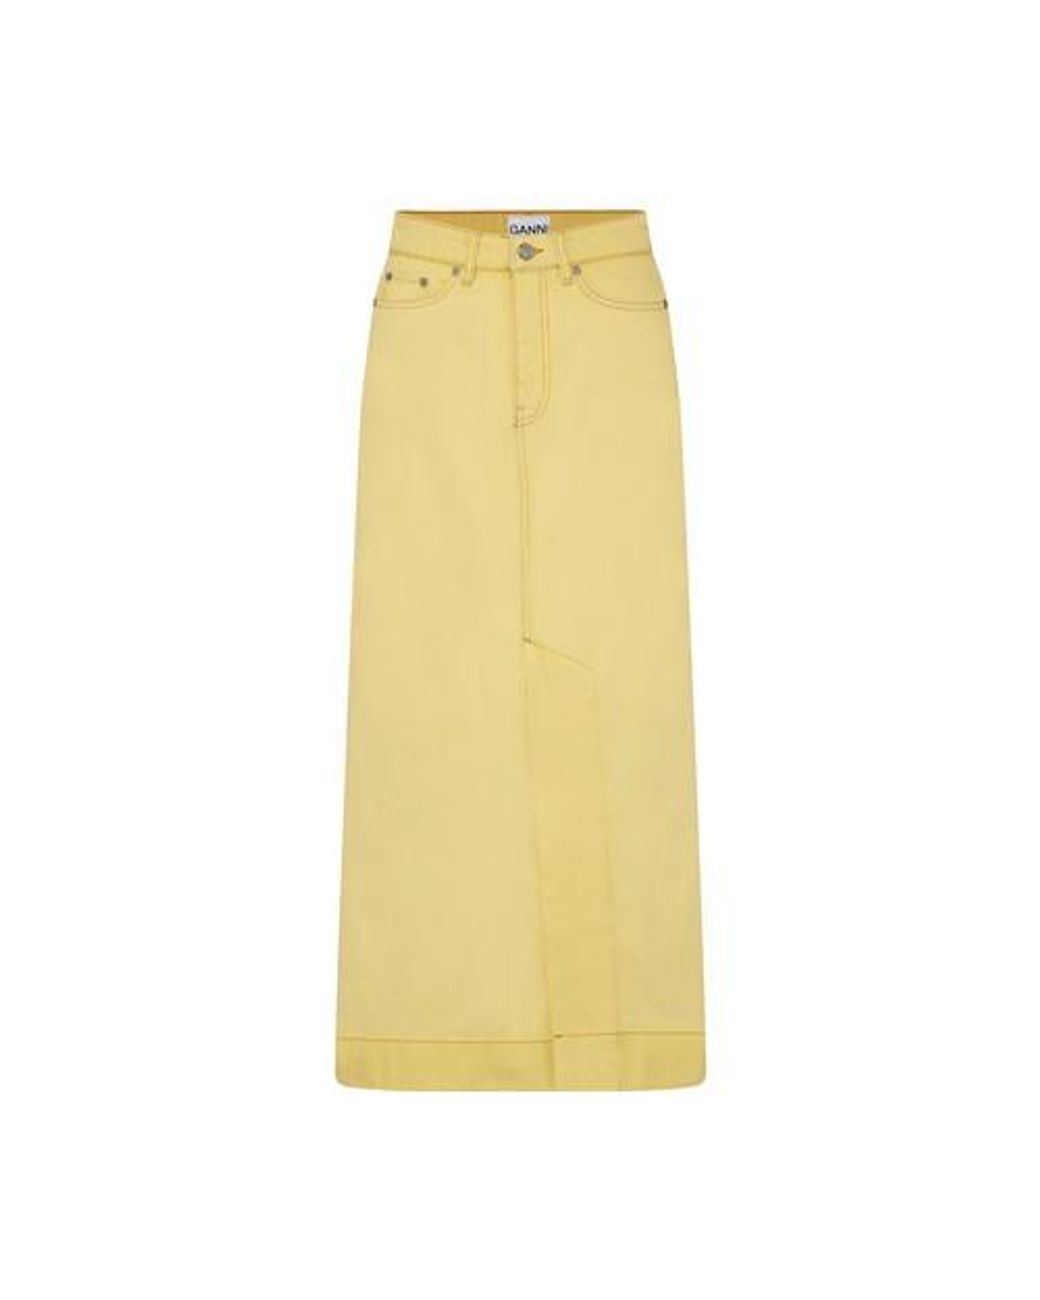 Ganni Denim Midi Skirt in Yellow | Lyst